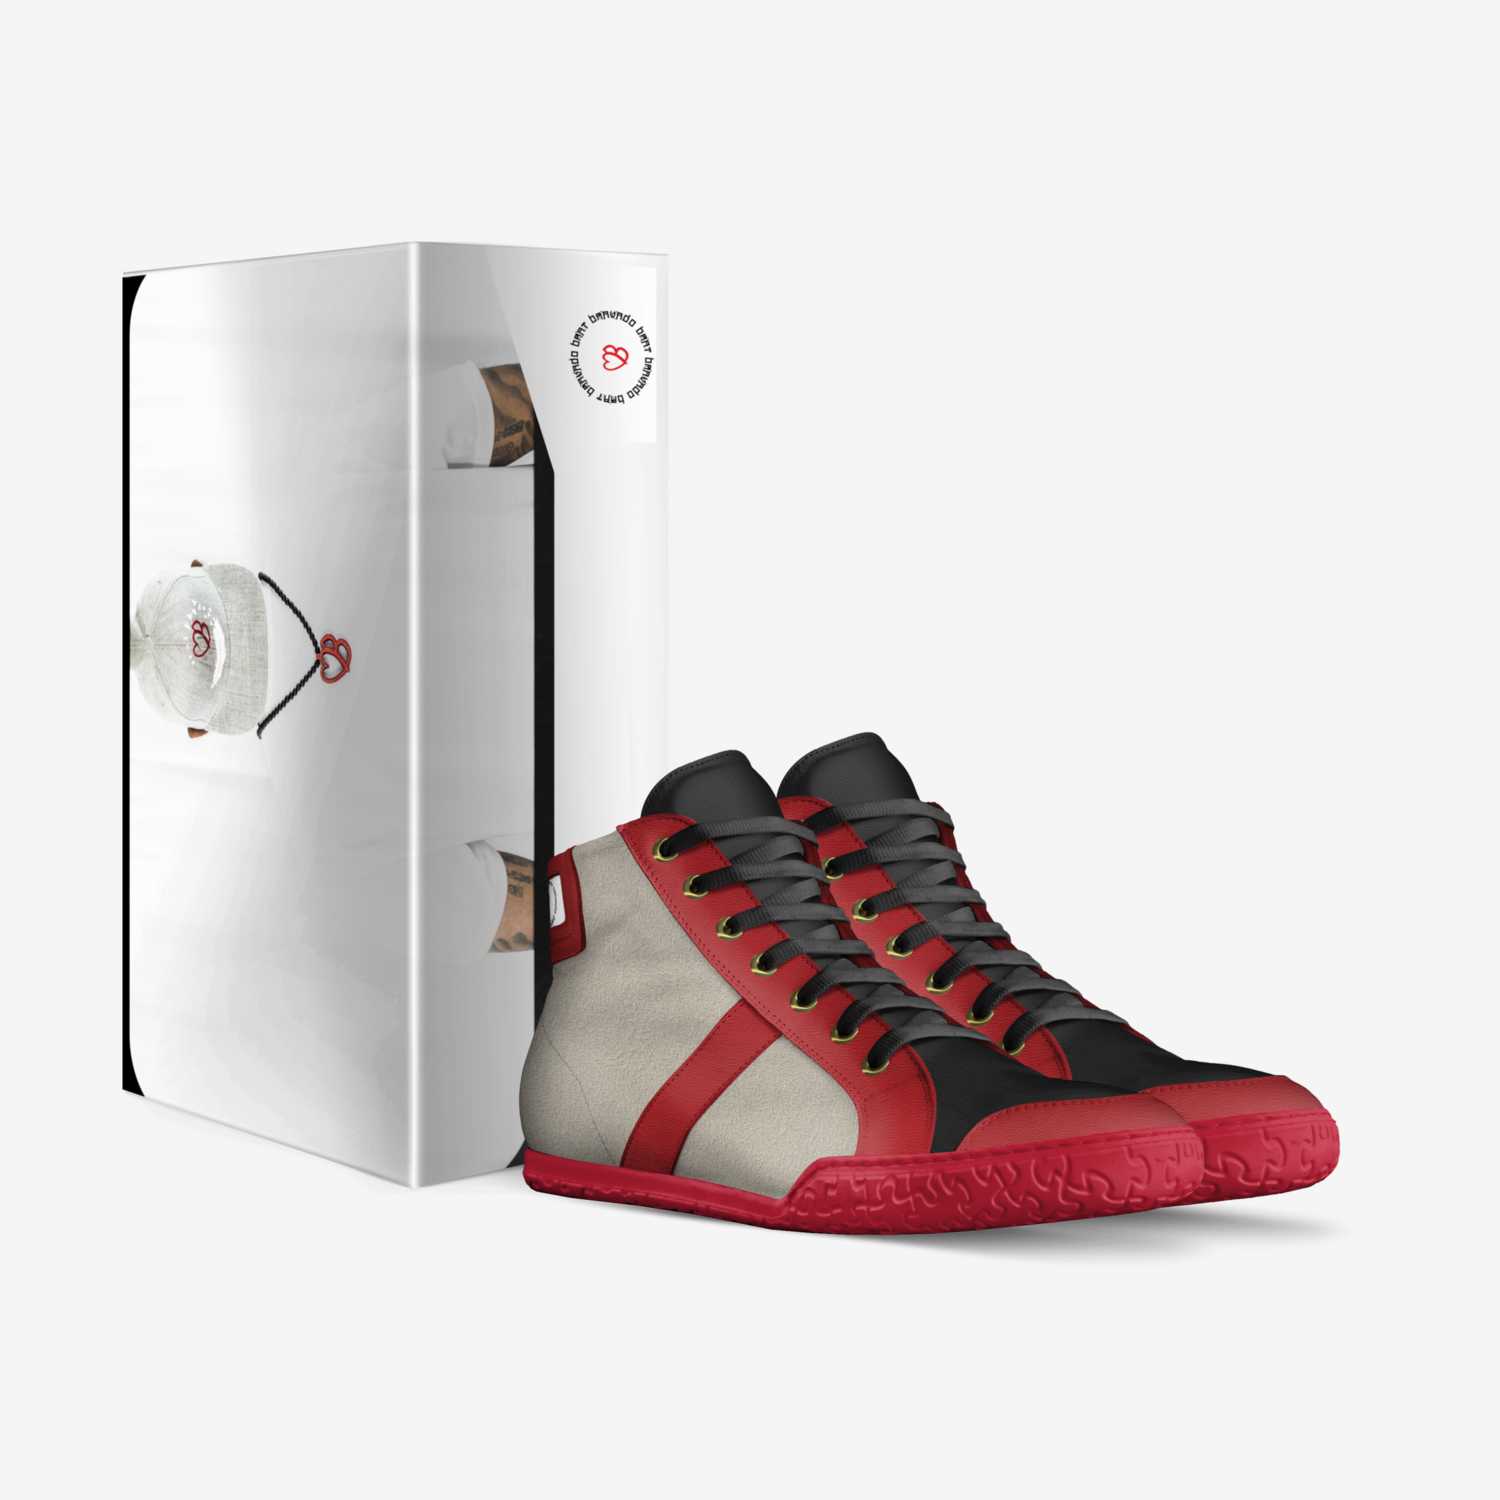 Bravado Brat custom made in Italy shoes by Brandon Coleman | Box view